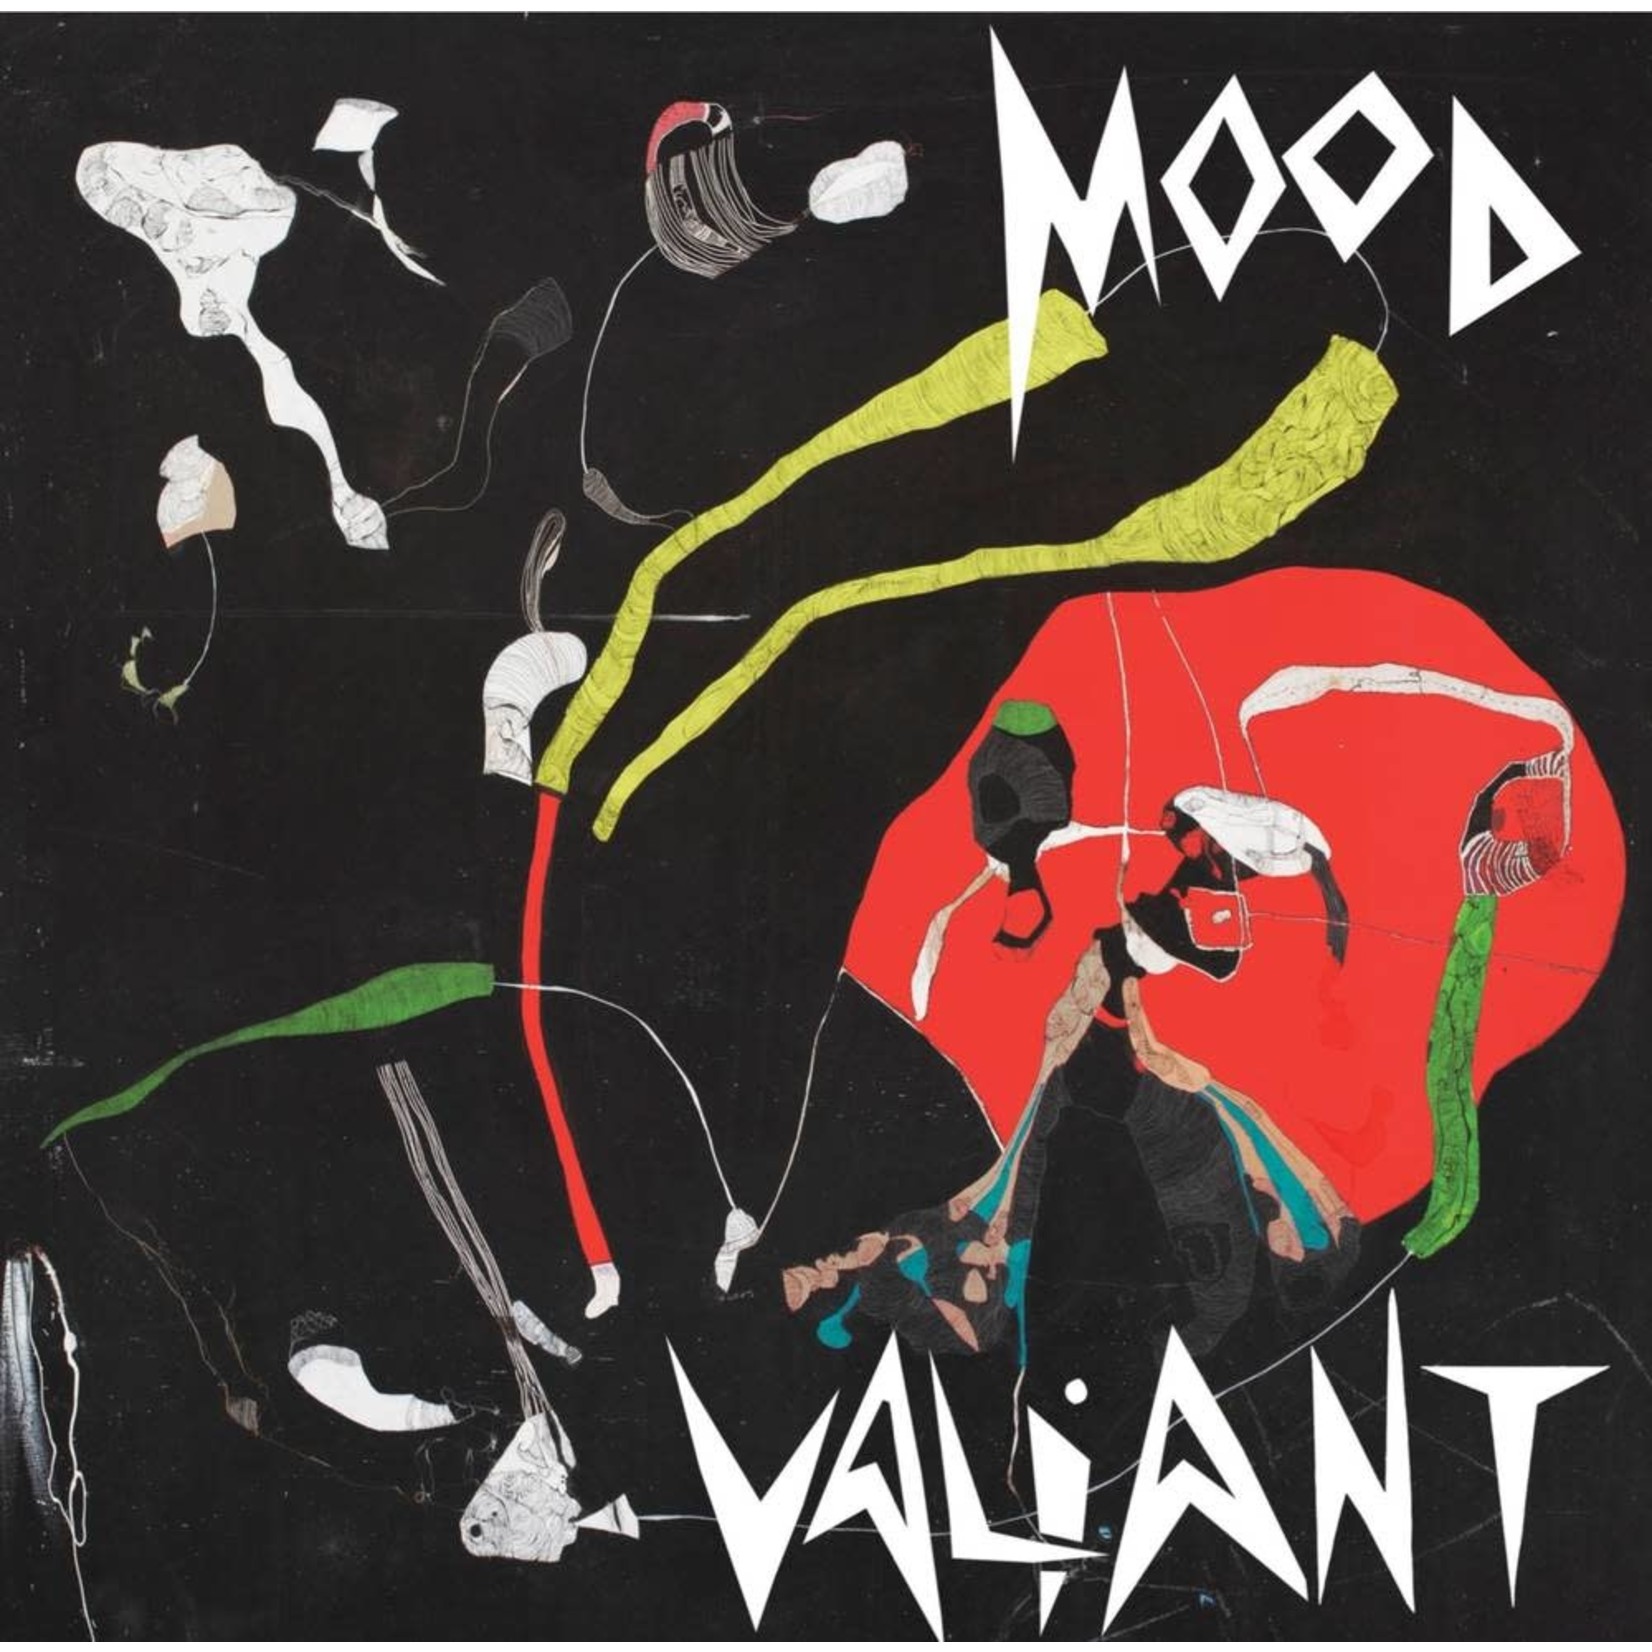 [New] Hiatus Kaiyote - Mood Valiant (deluxe glow in the dark colour vinyl)